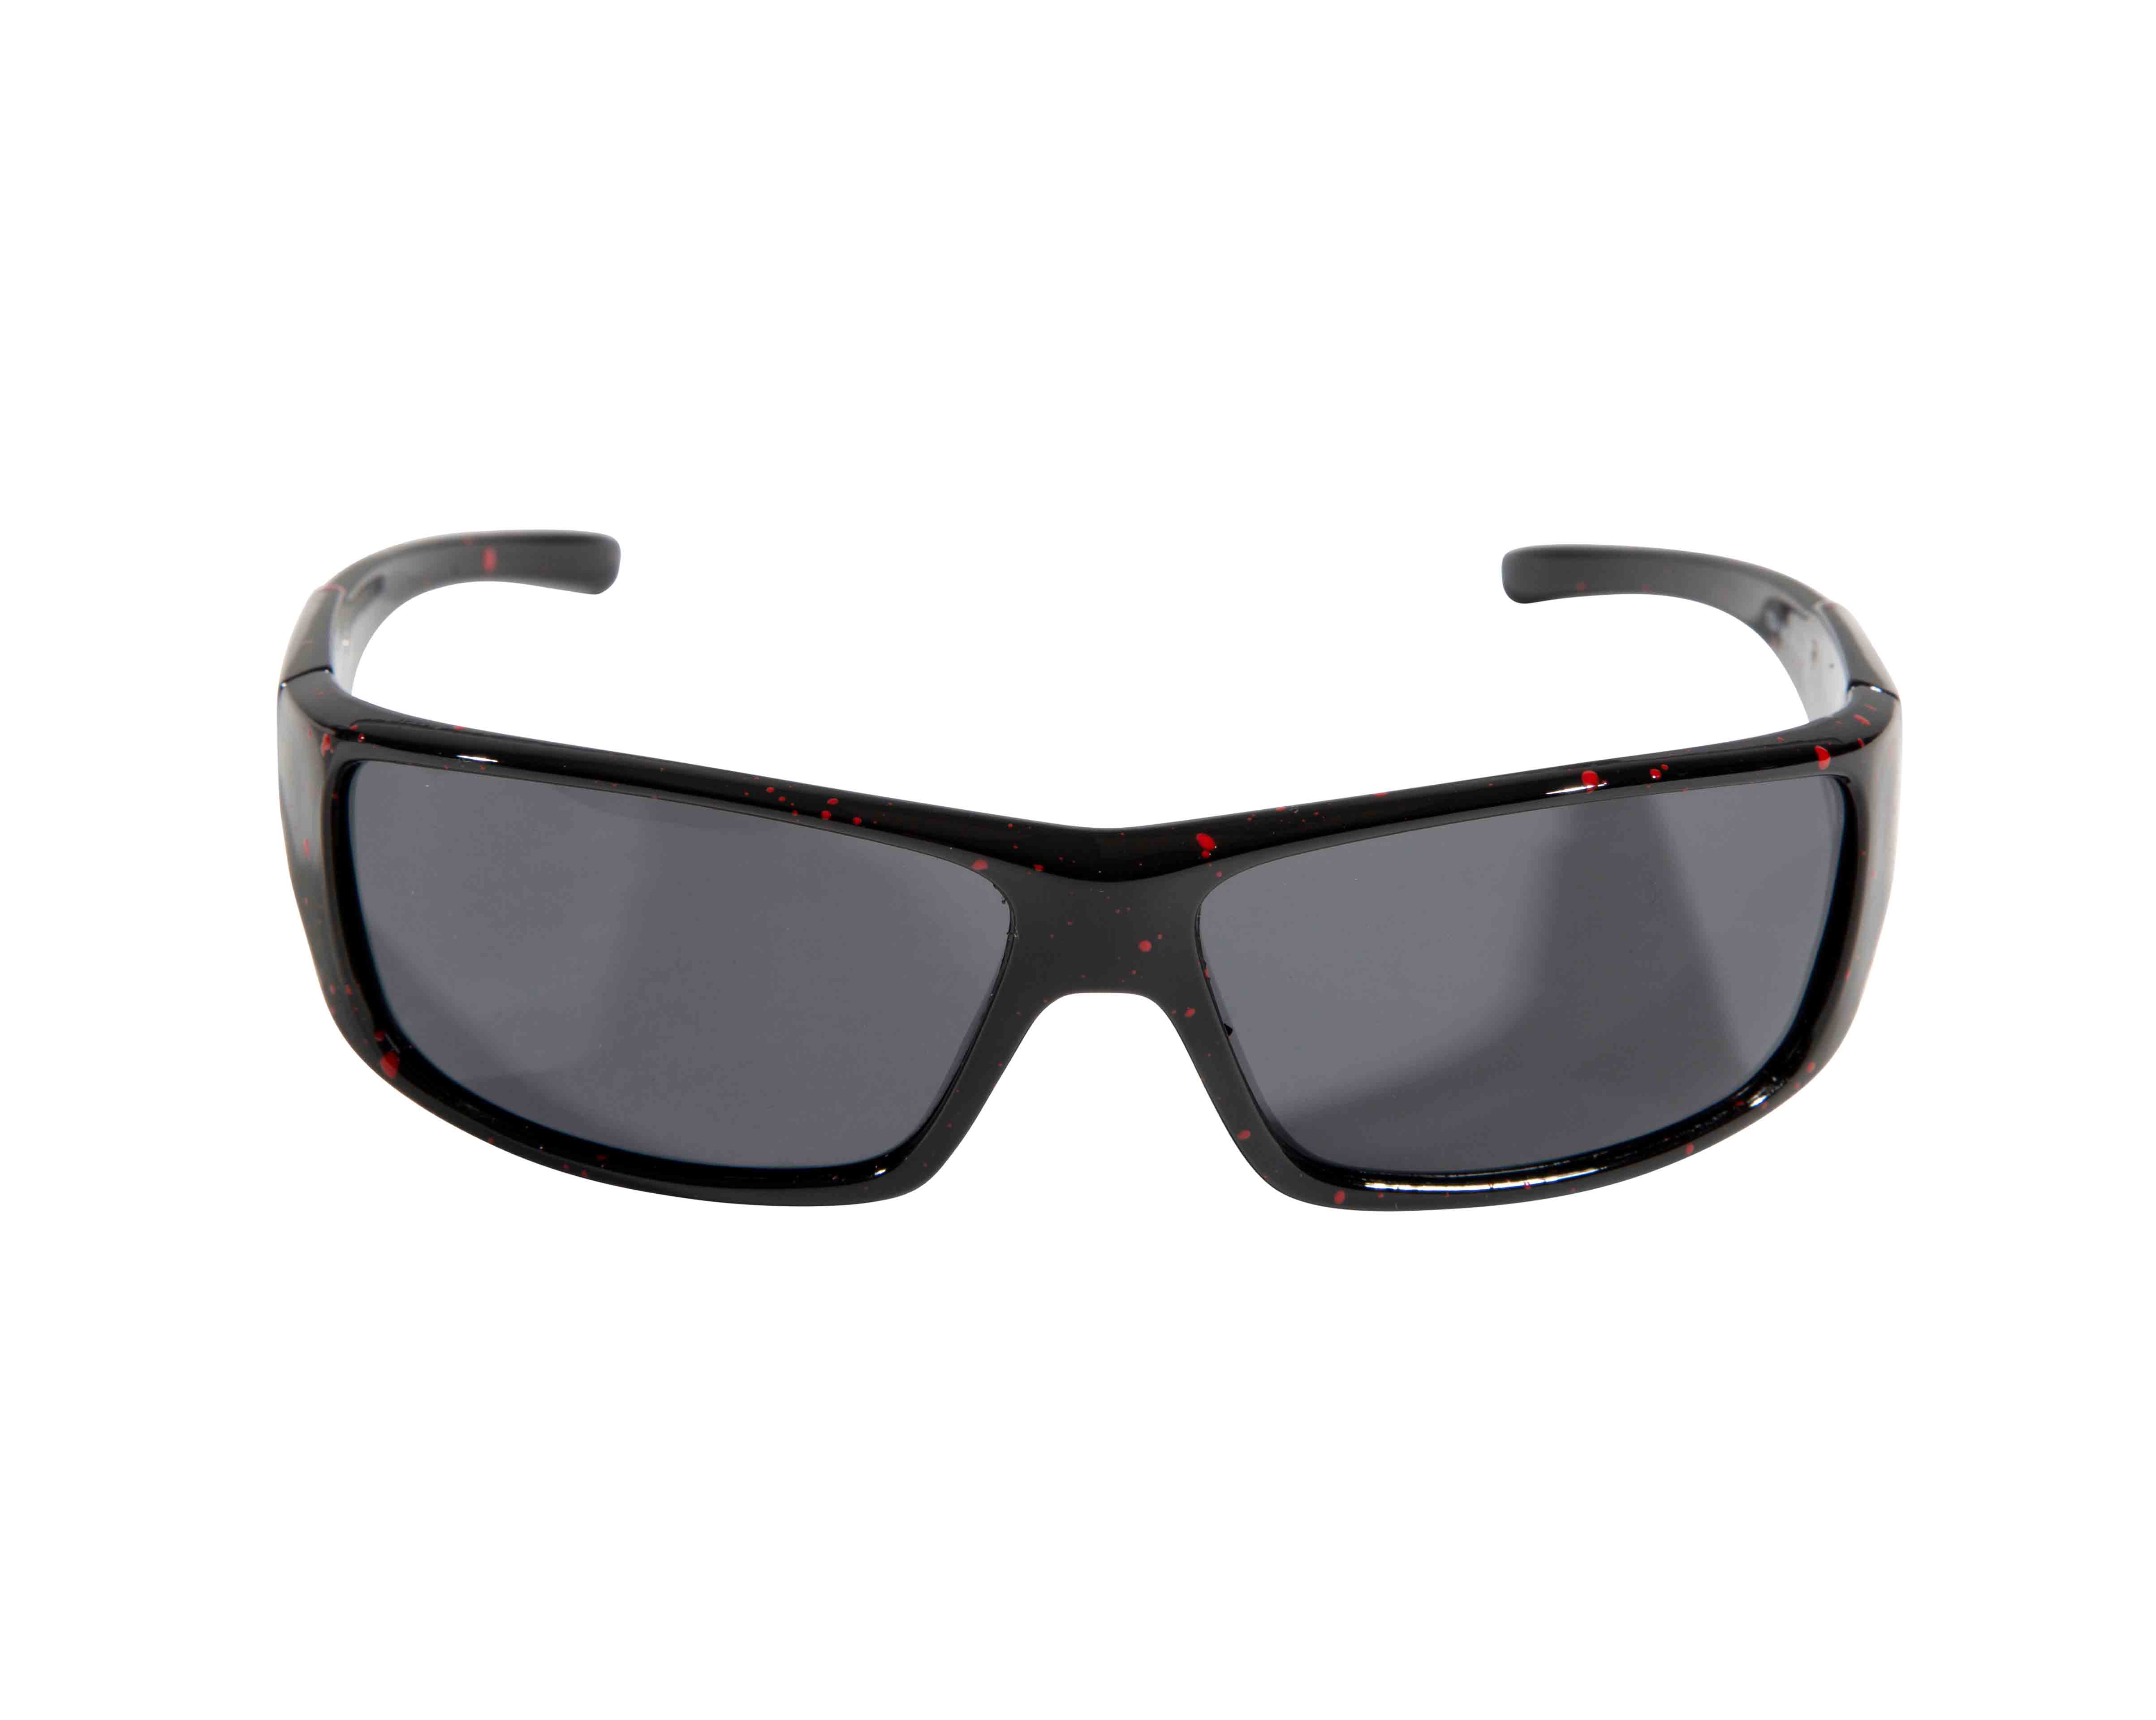 Catchgear Polarized Sunglasses Black